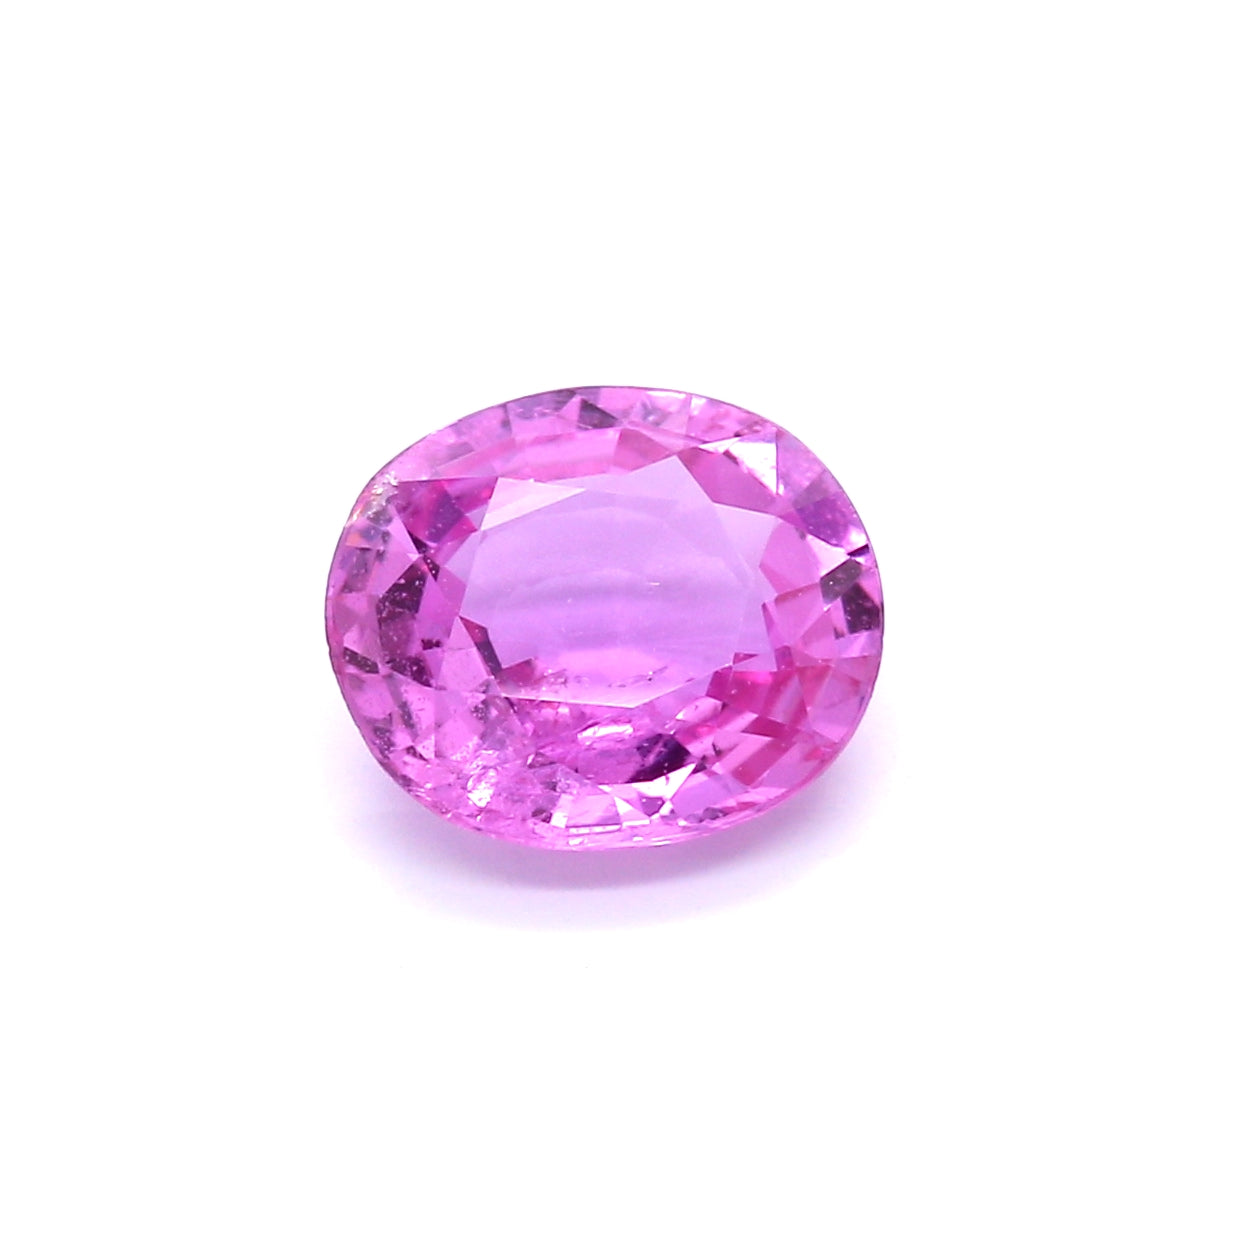 3.02ct Pink, Oval Sapphire, Heated, Madagascar - 9.72 x 8.40 x 4.12mm